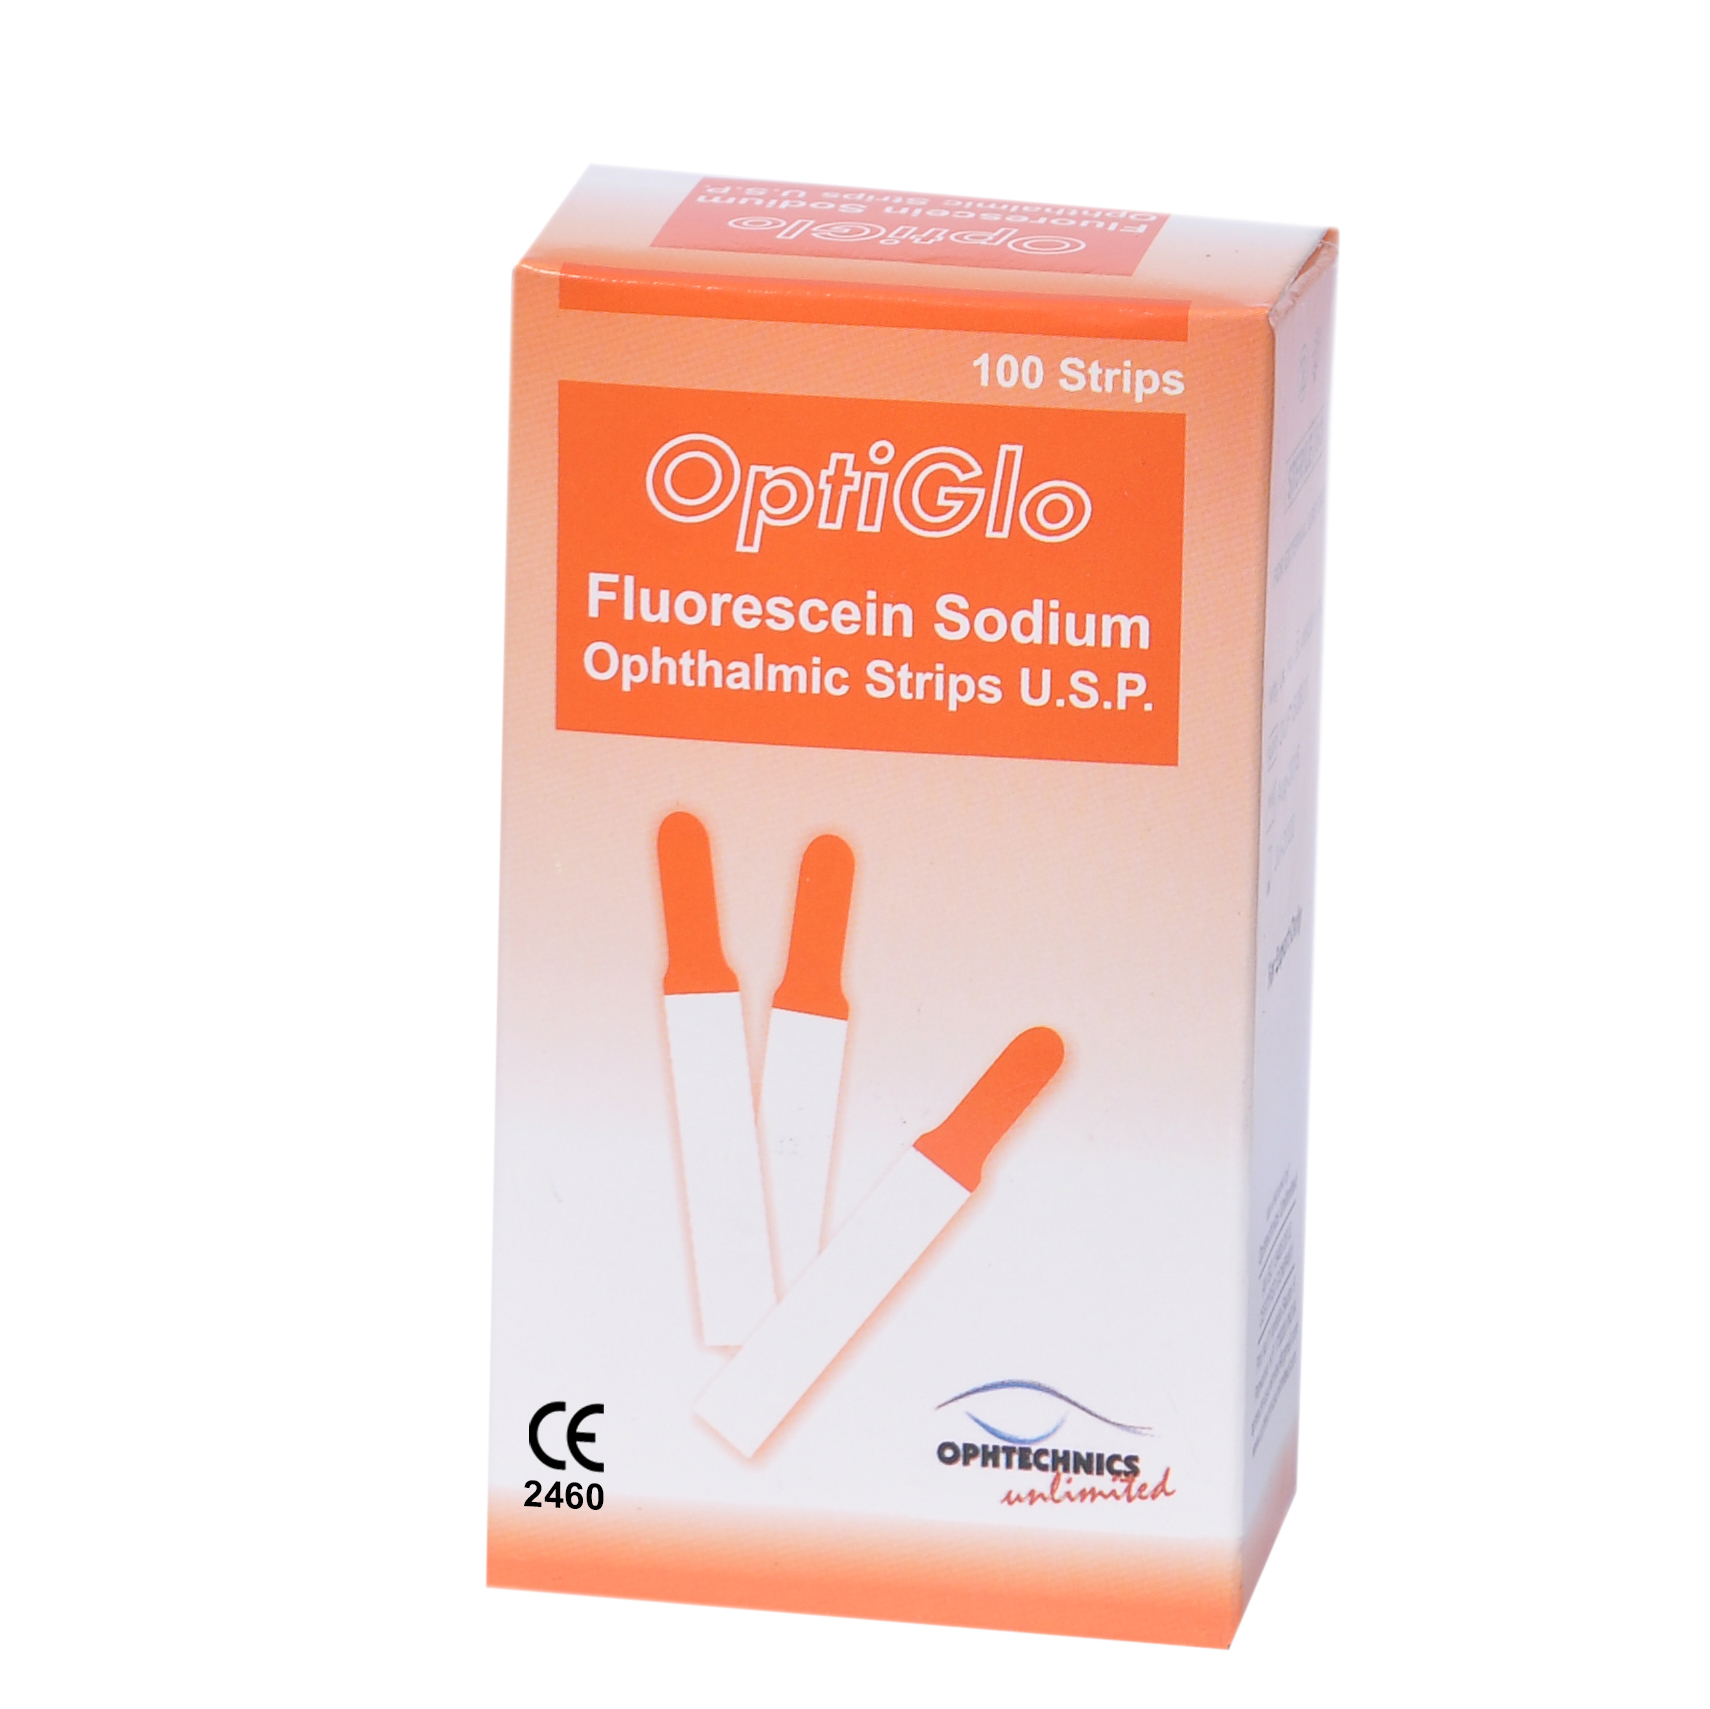 Fluorescein Sodium Ophthalmic Strips